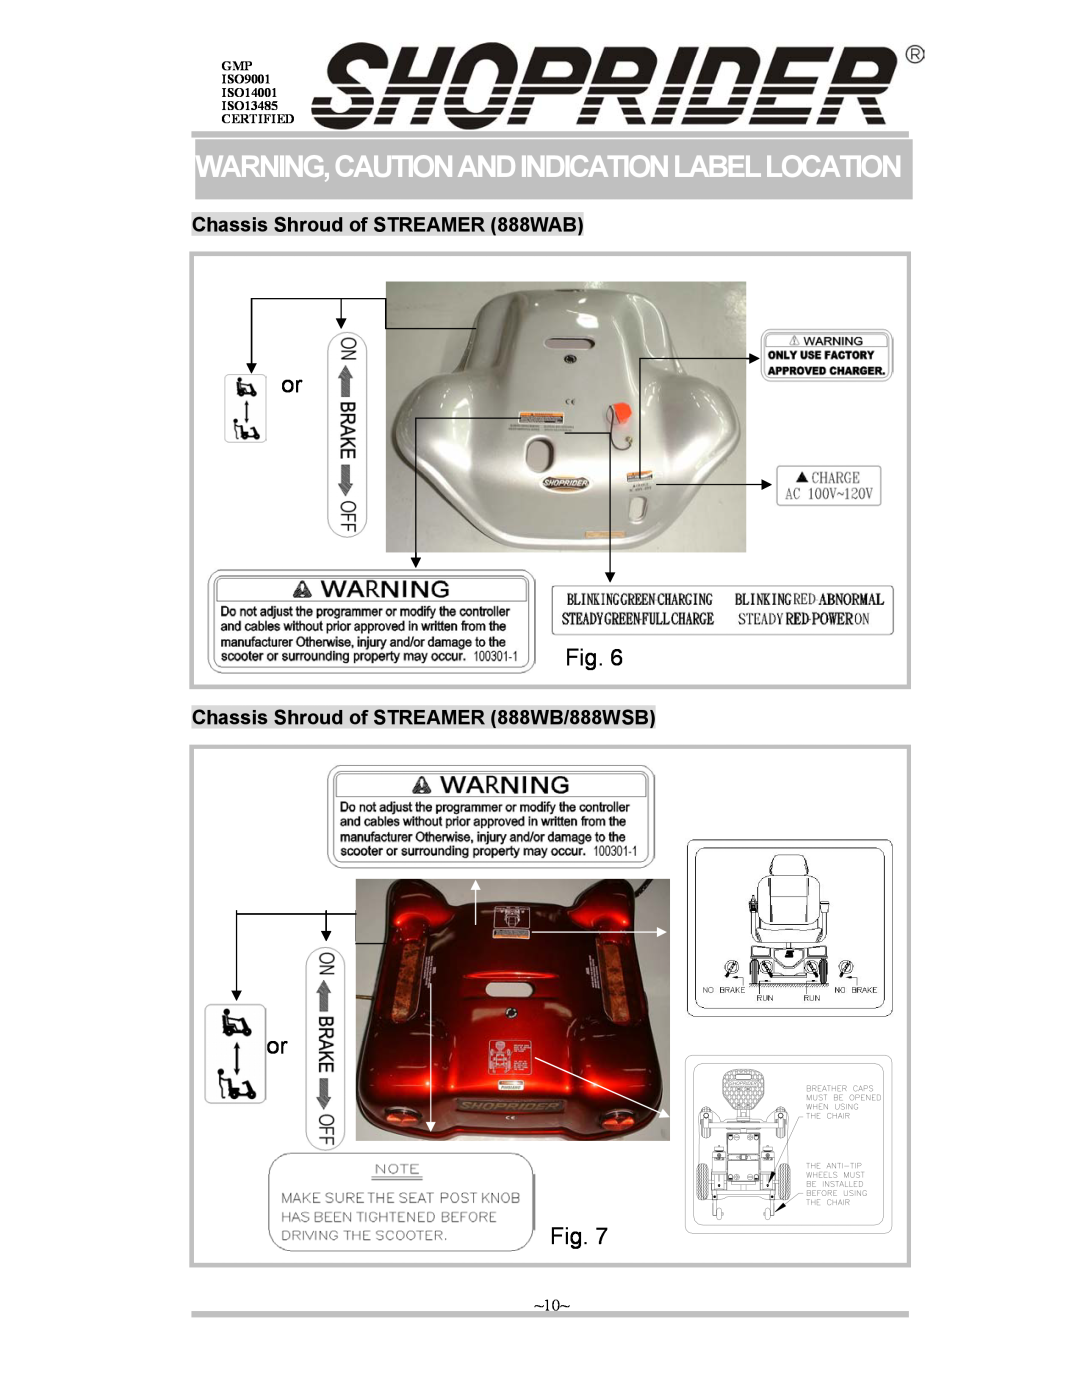 Shoprider Jetstream-M 888WAM manual Warning,Cautionandindicationlabellocation, Chassis Shroud of STREAMER 888WAB, ~10~ 